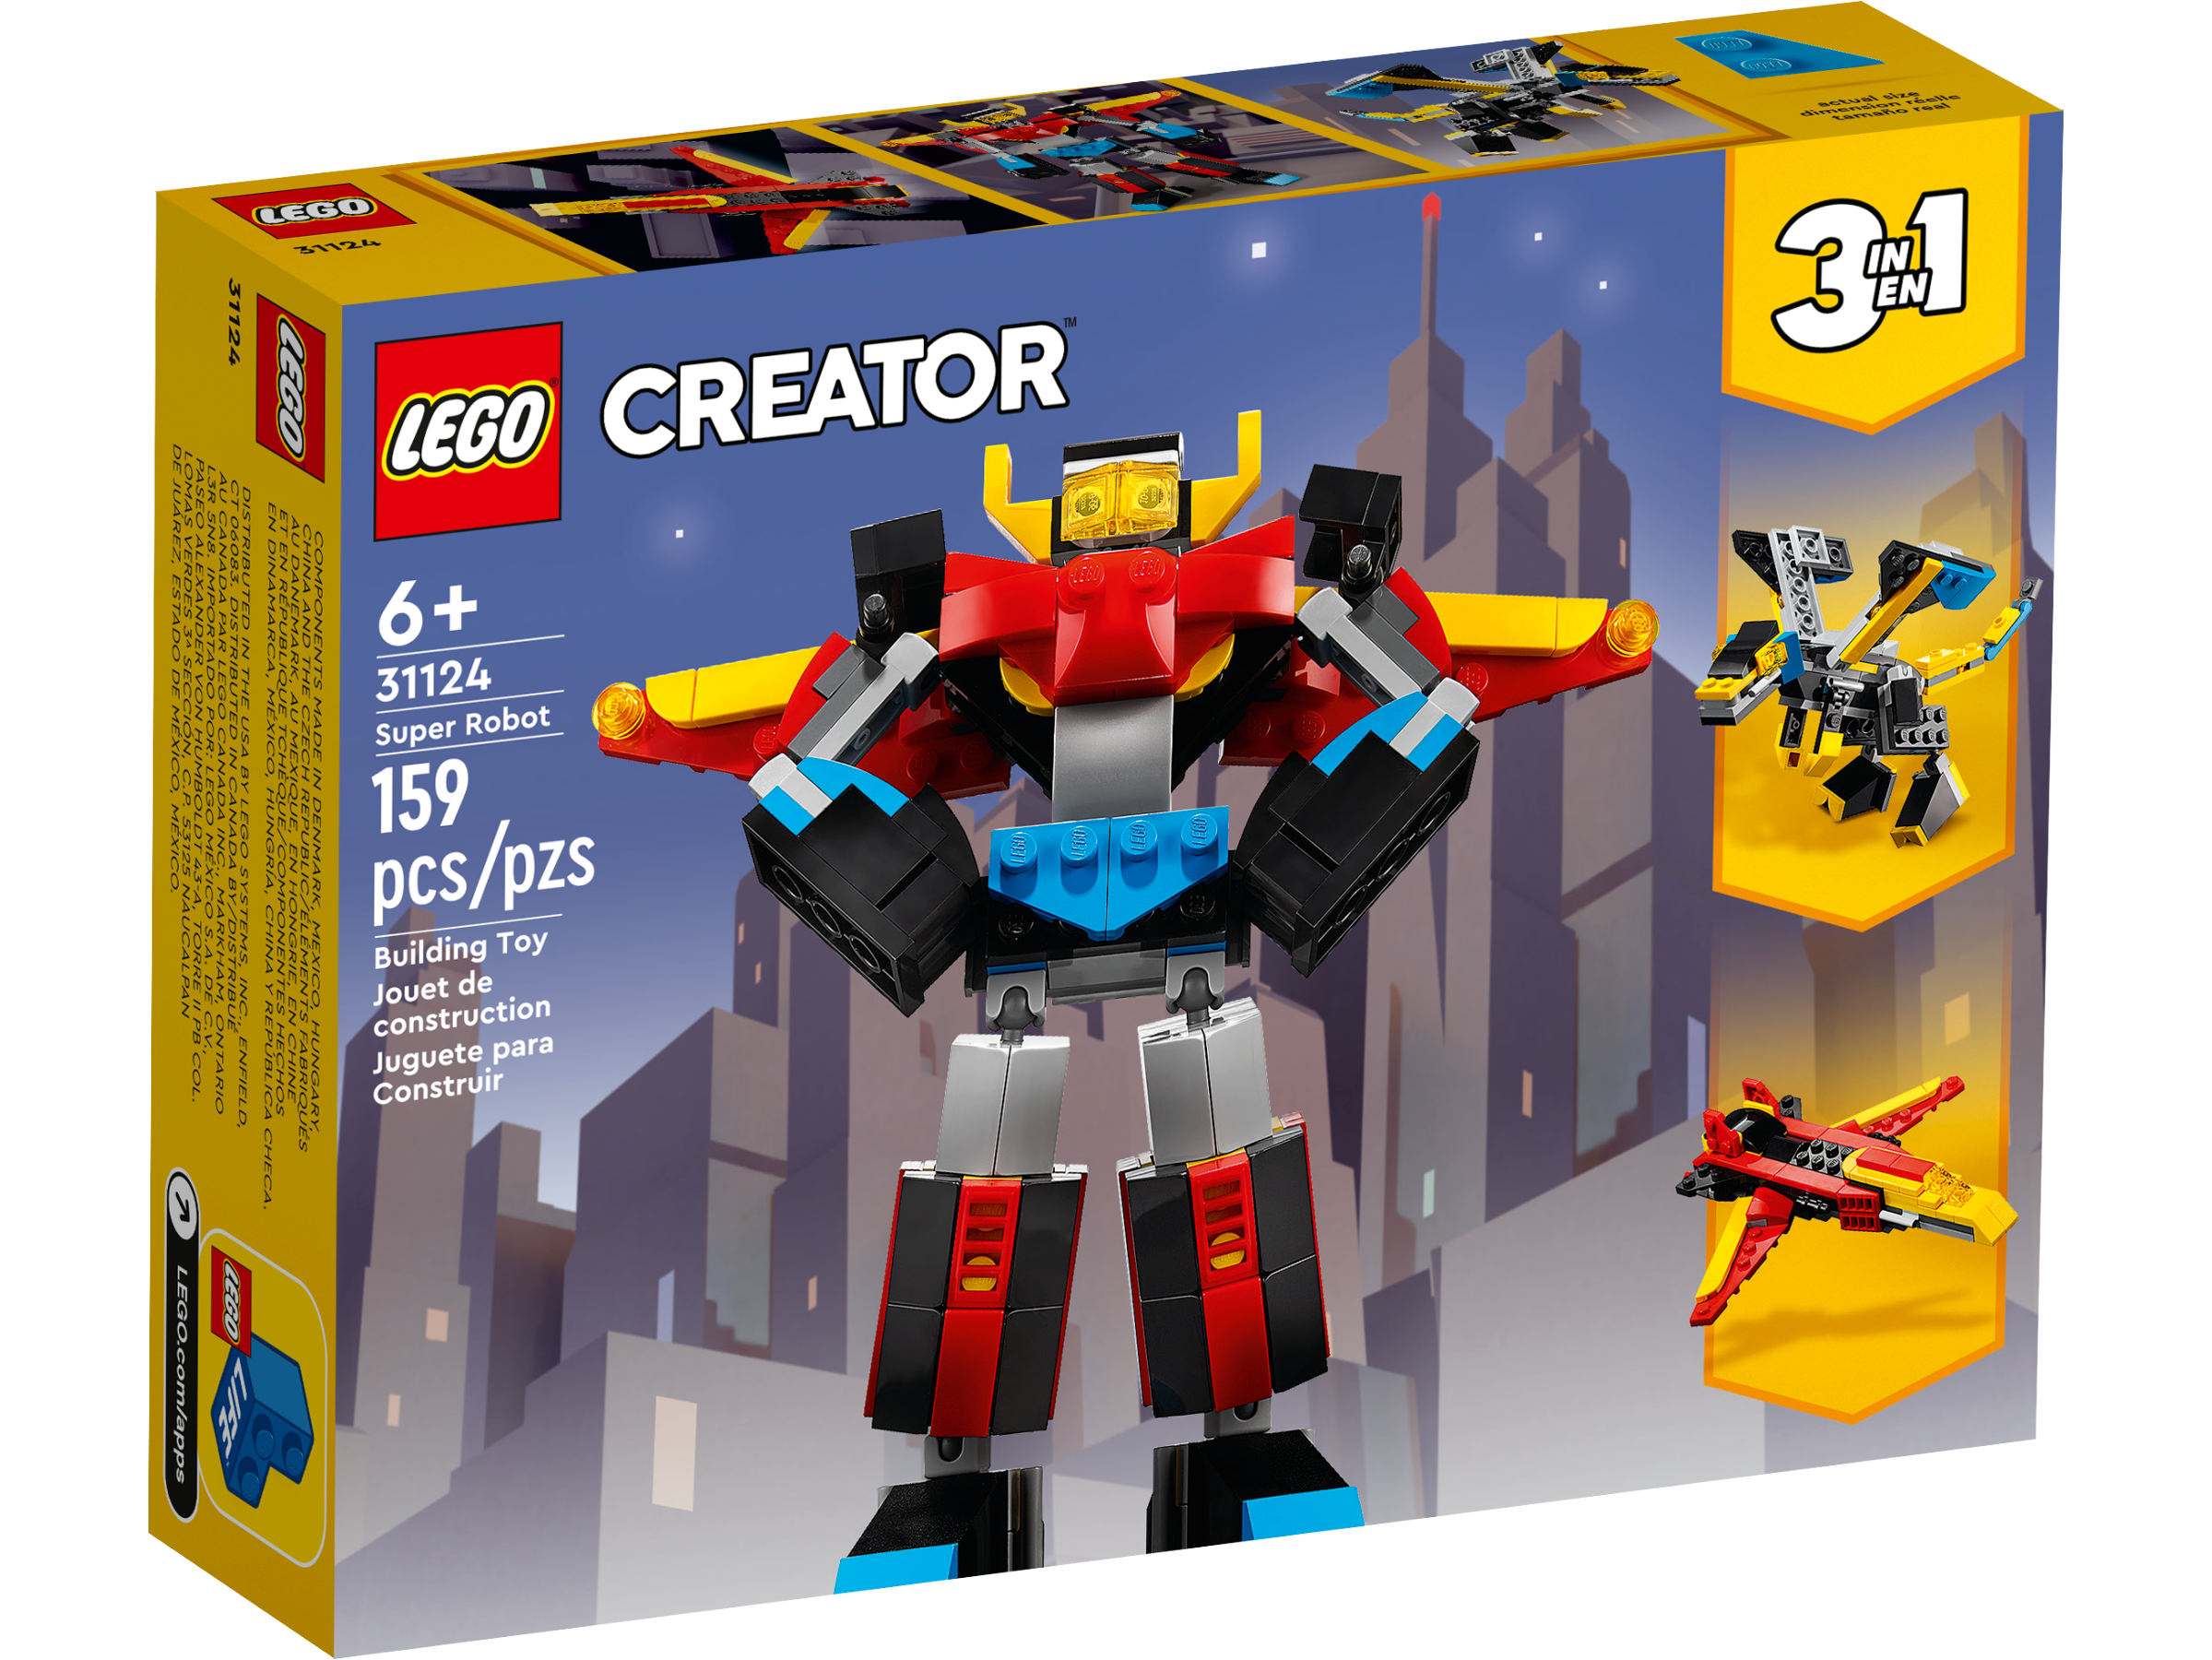 Compatibile con Lego Super Robot Building Blocks Warrior Mecha Deformation  Robot Building Blocks Toys Children's Gift 996pcs